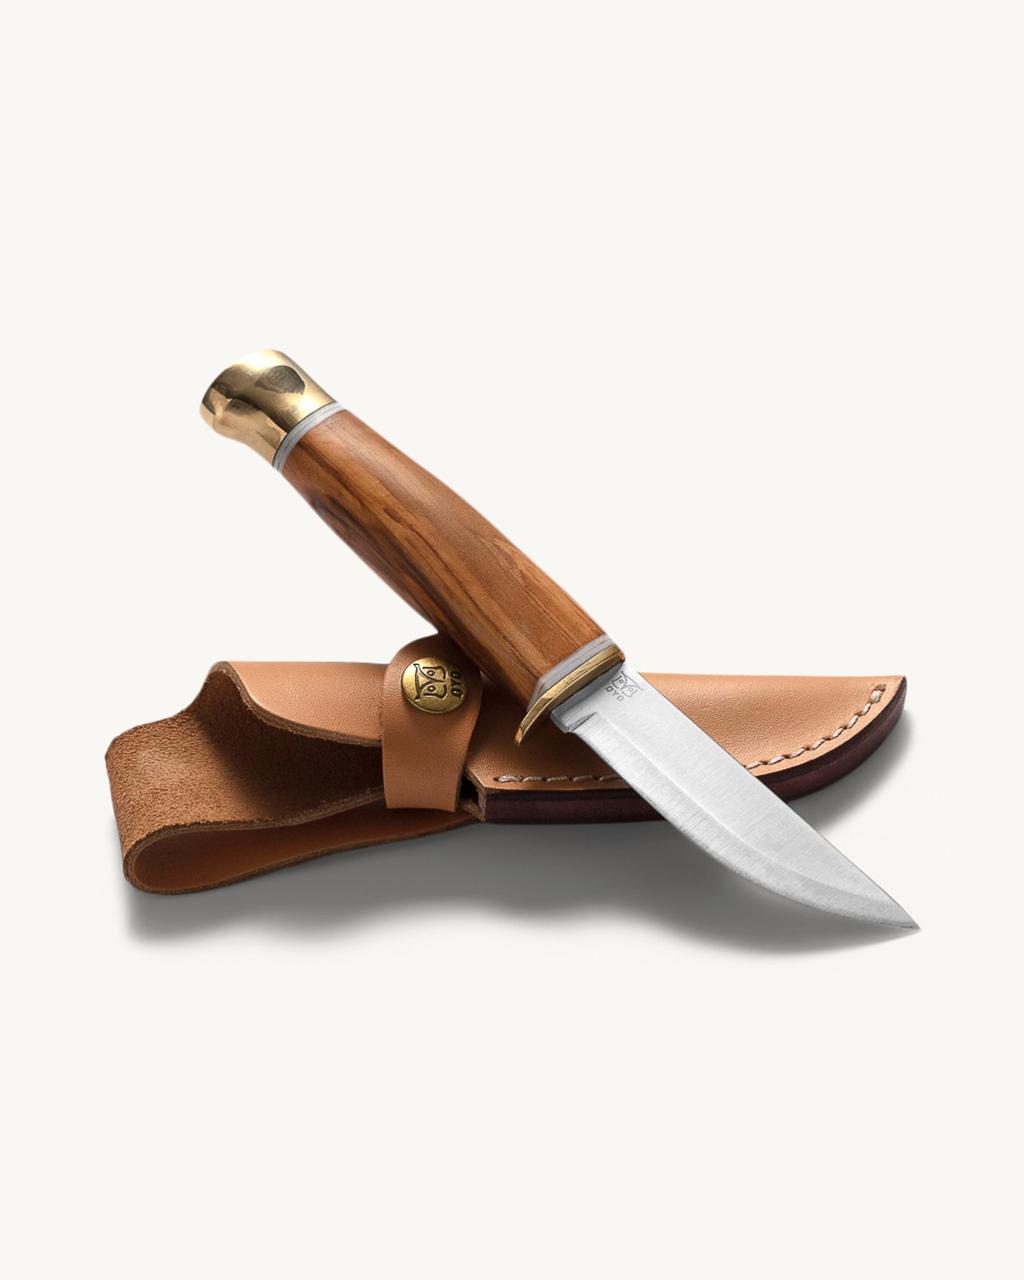 Jotunheimen knife w/leather sheath